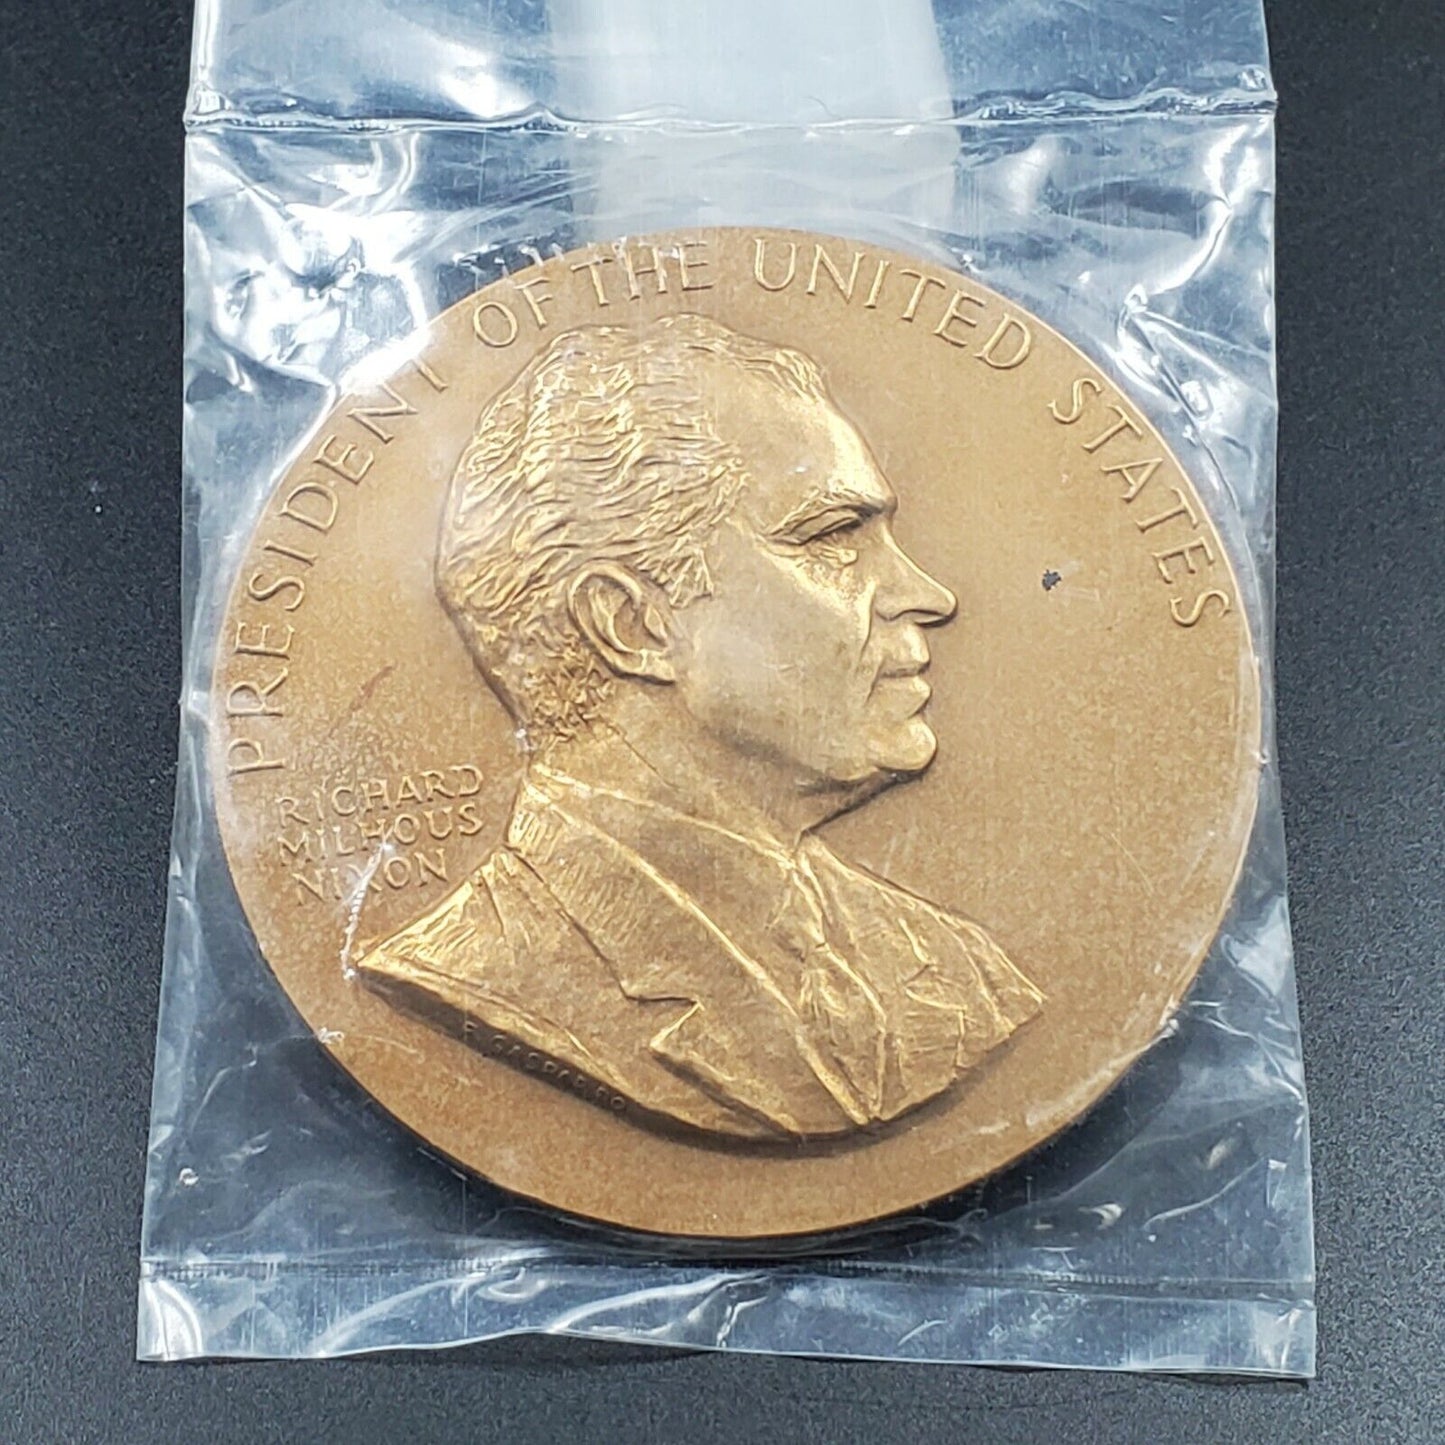 1969 RICHARD NIXON INAUGURATION Bronze INAUGURAL Bronze Medal